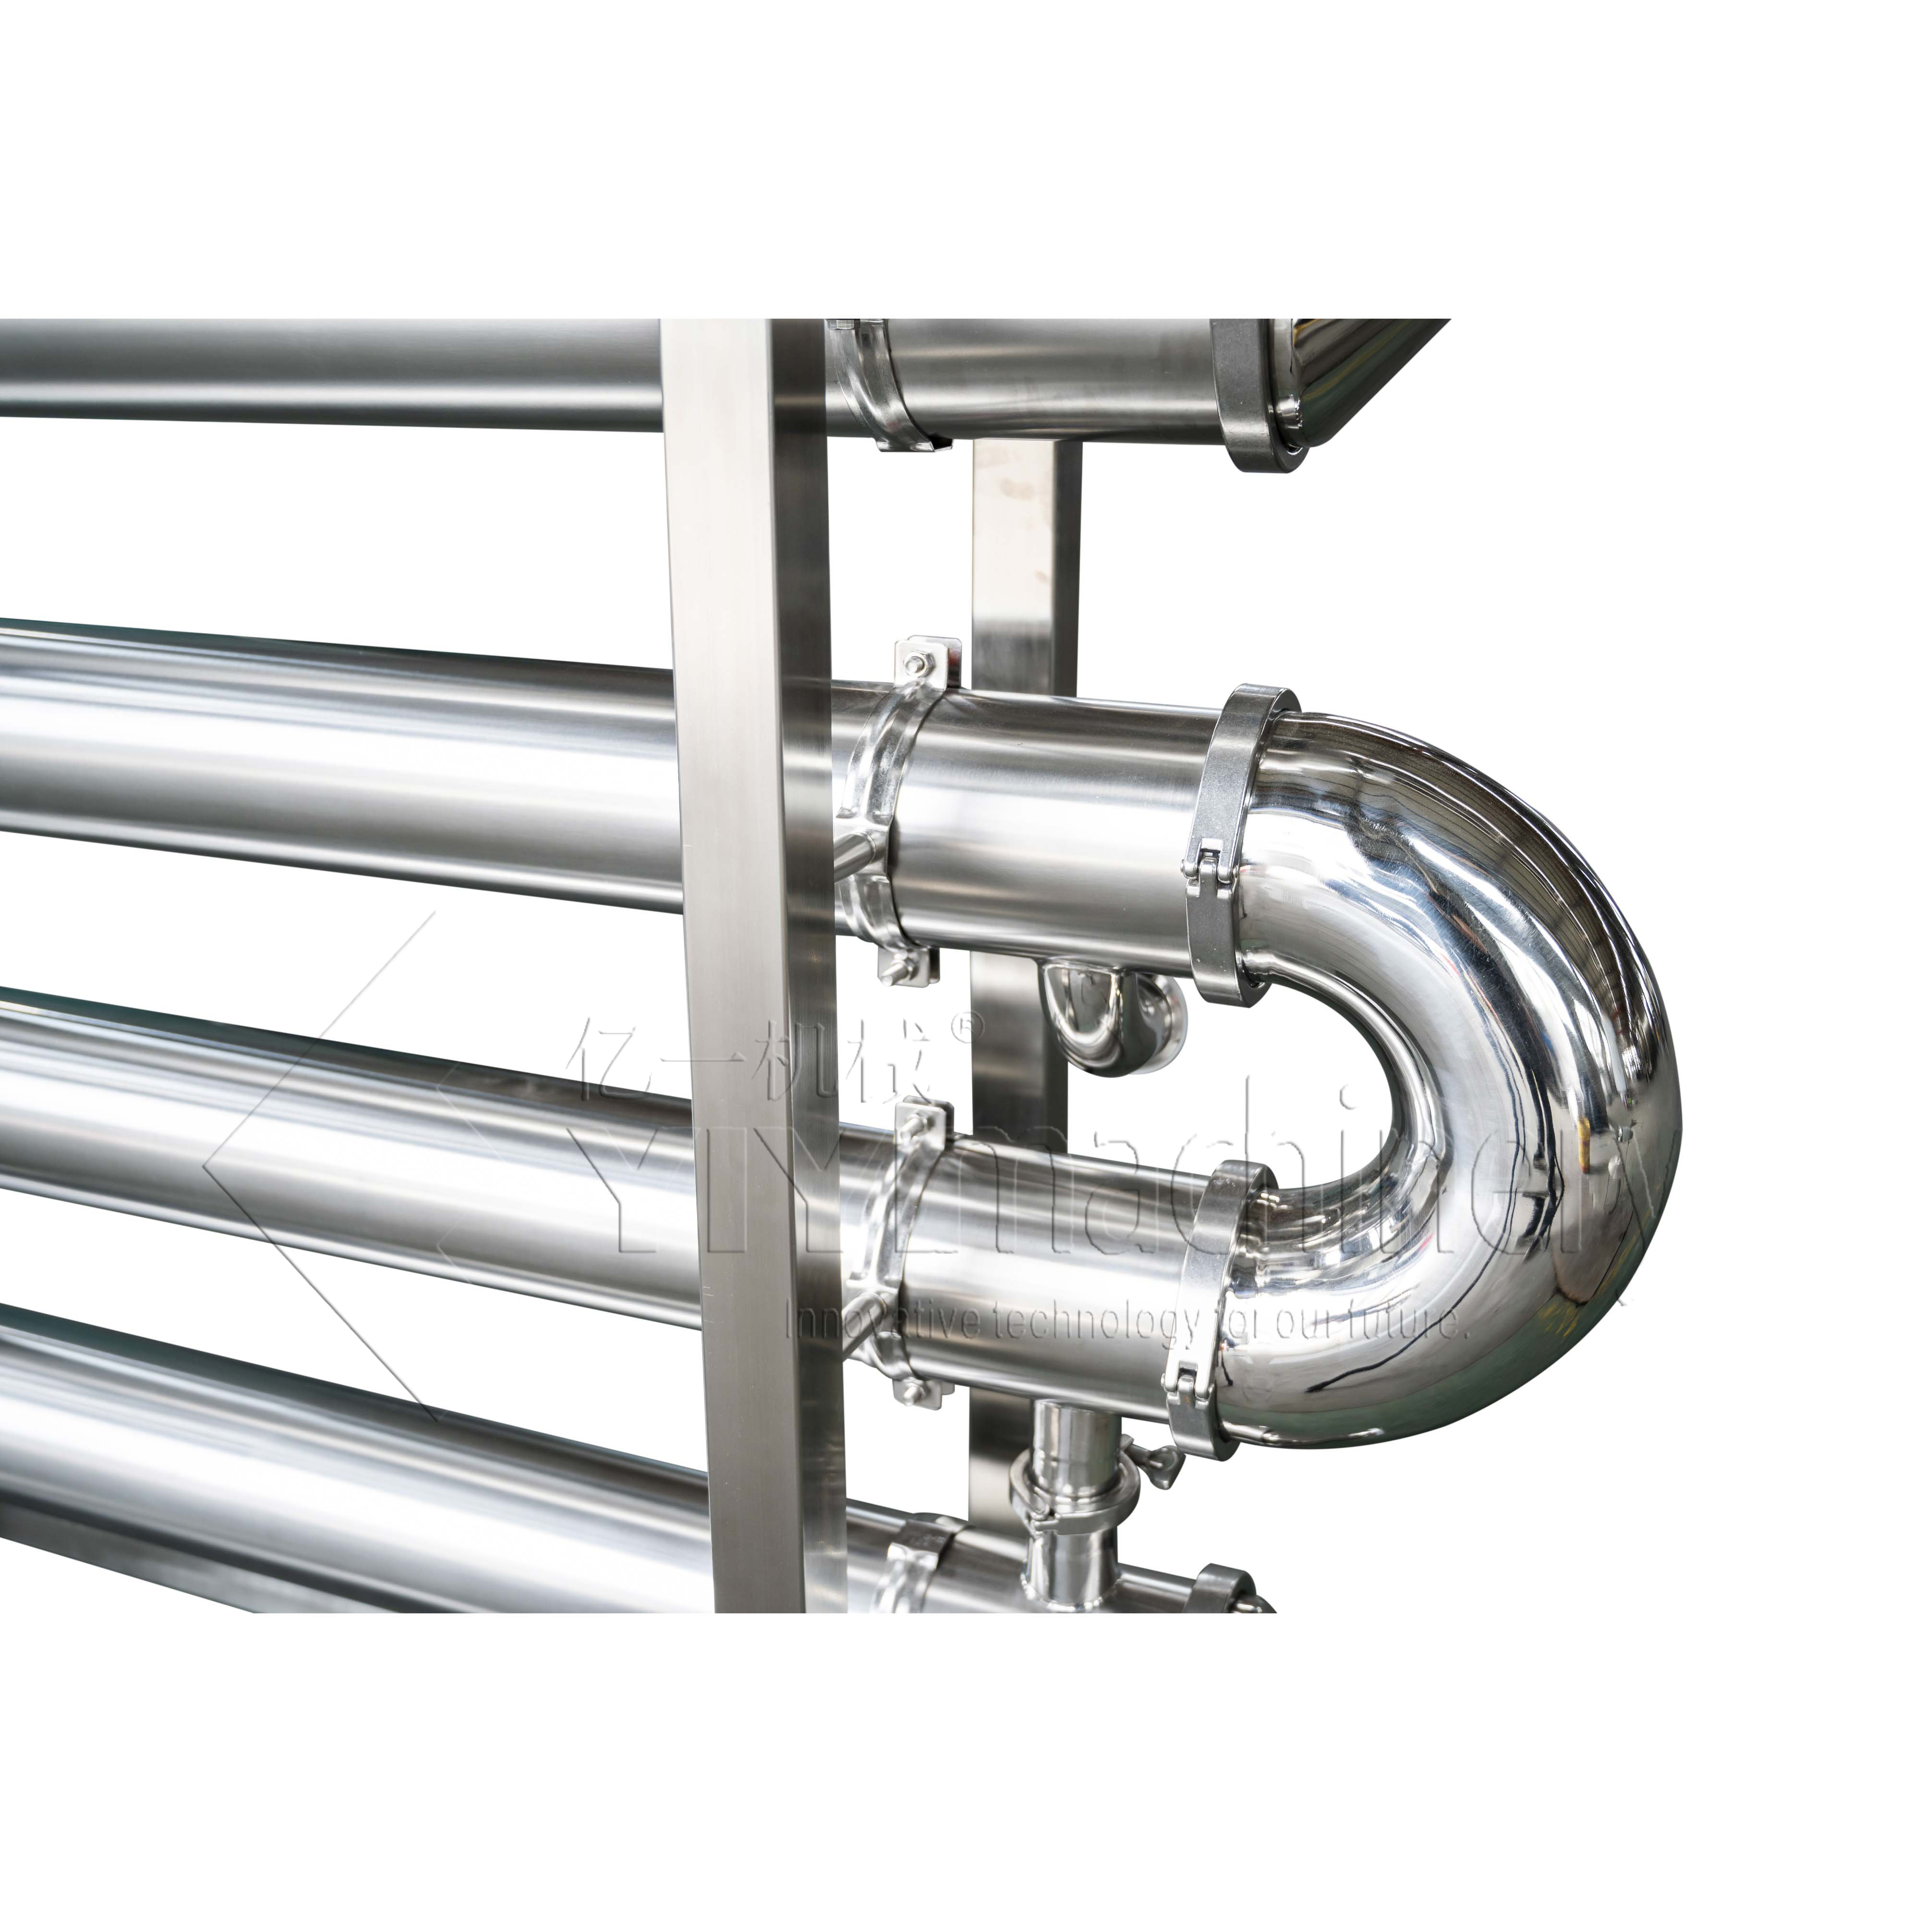 Stainless Steel Titanium Gasket Plate Heat Exchanger for Water Oil Sugar Milk Beer Chemical Industry Cooling And Heating Cross-flow Heat Exchanger 